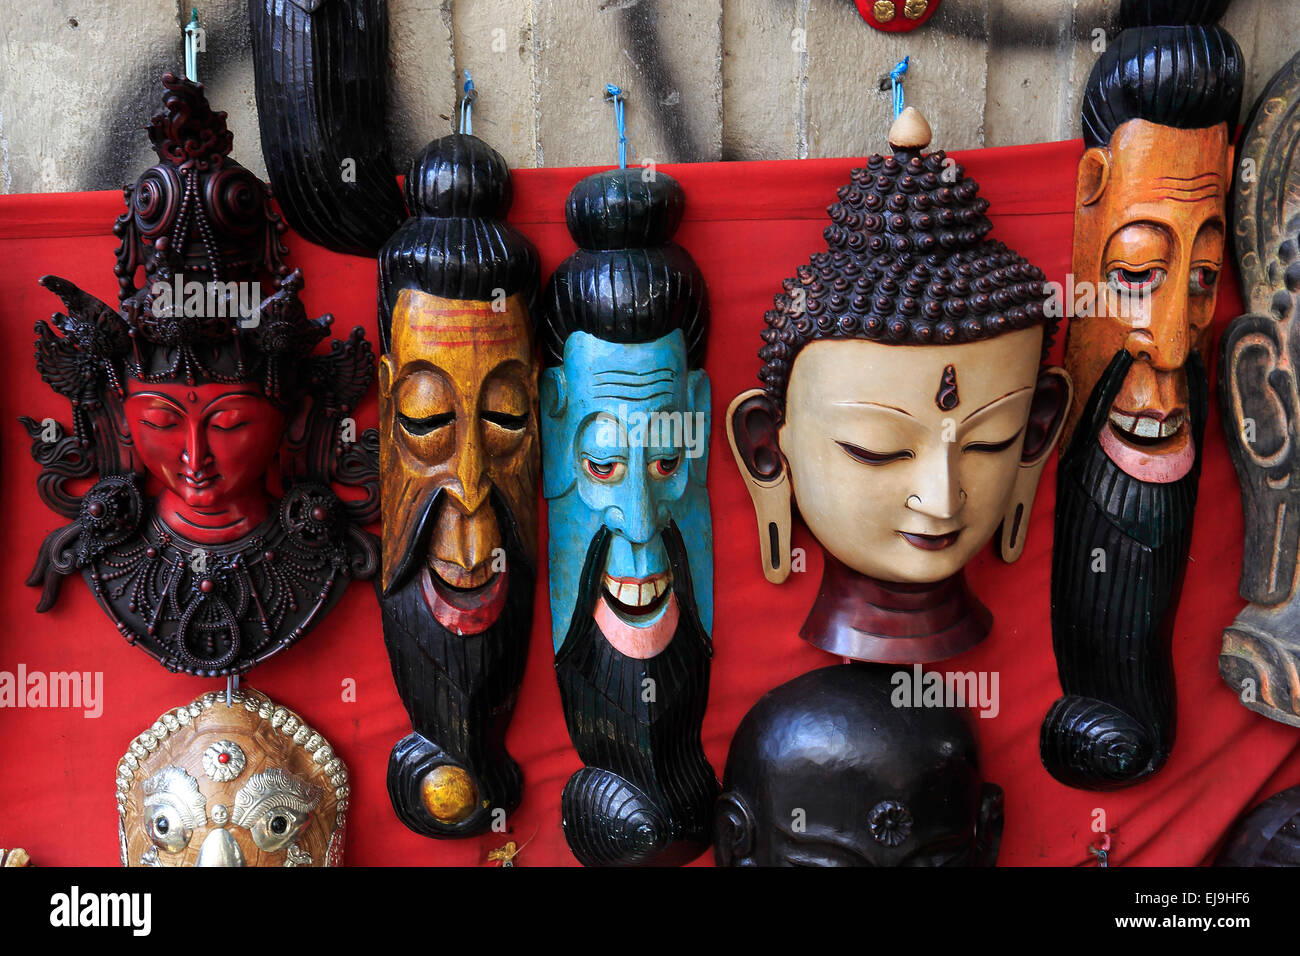 Souvenir stalls and shops, Thamel district, Kathmandu city, Nepal, Asia. Stock Photo